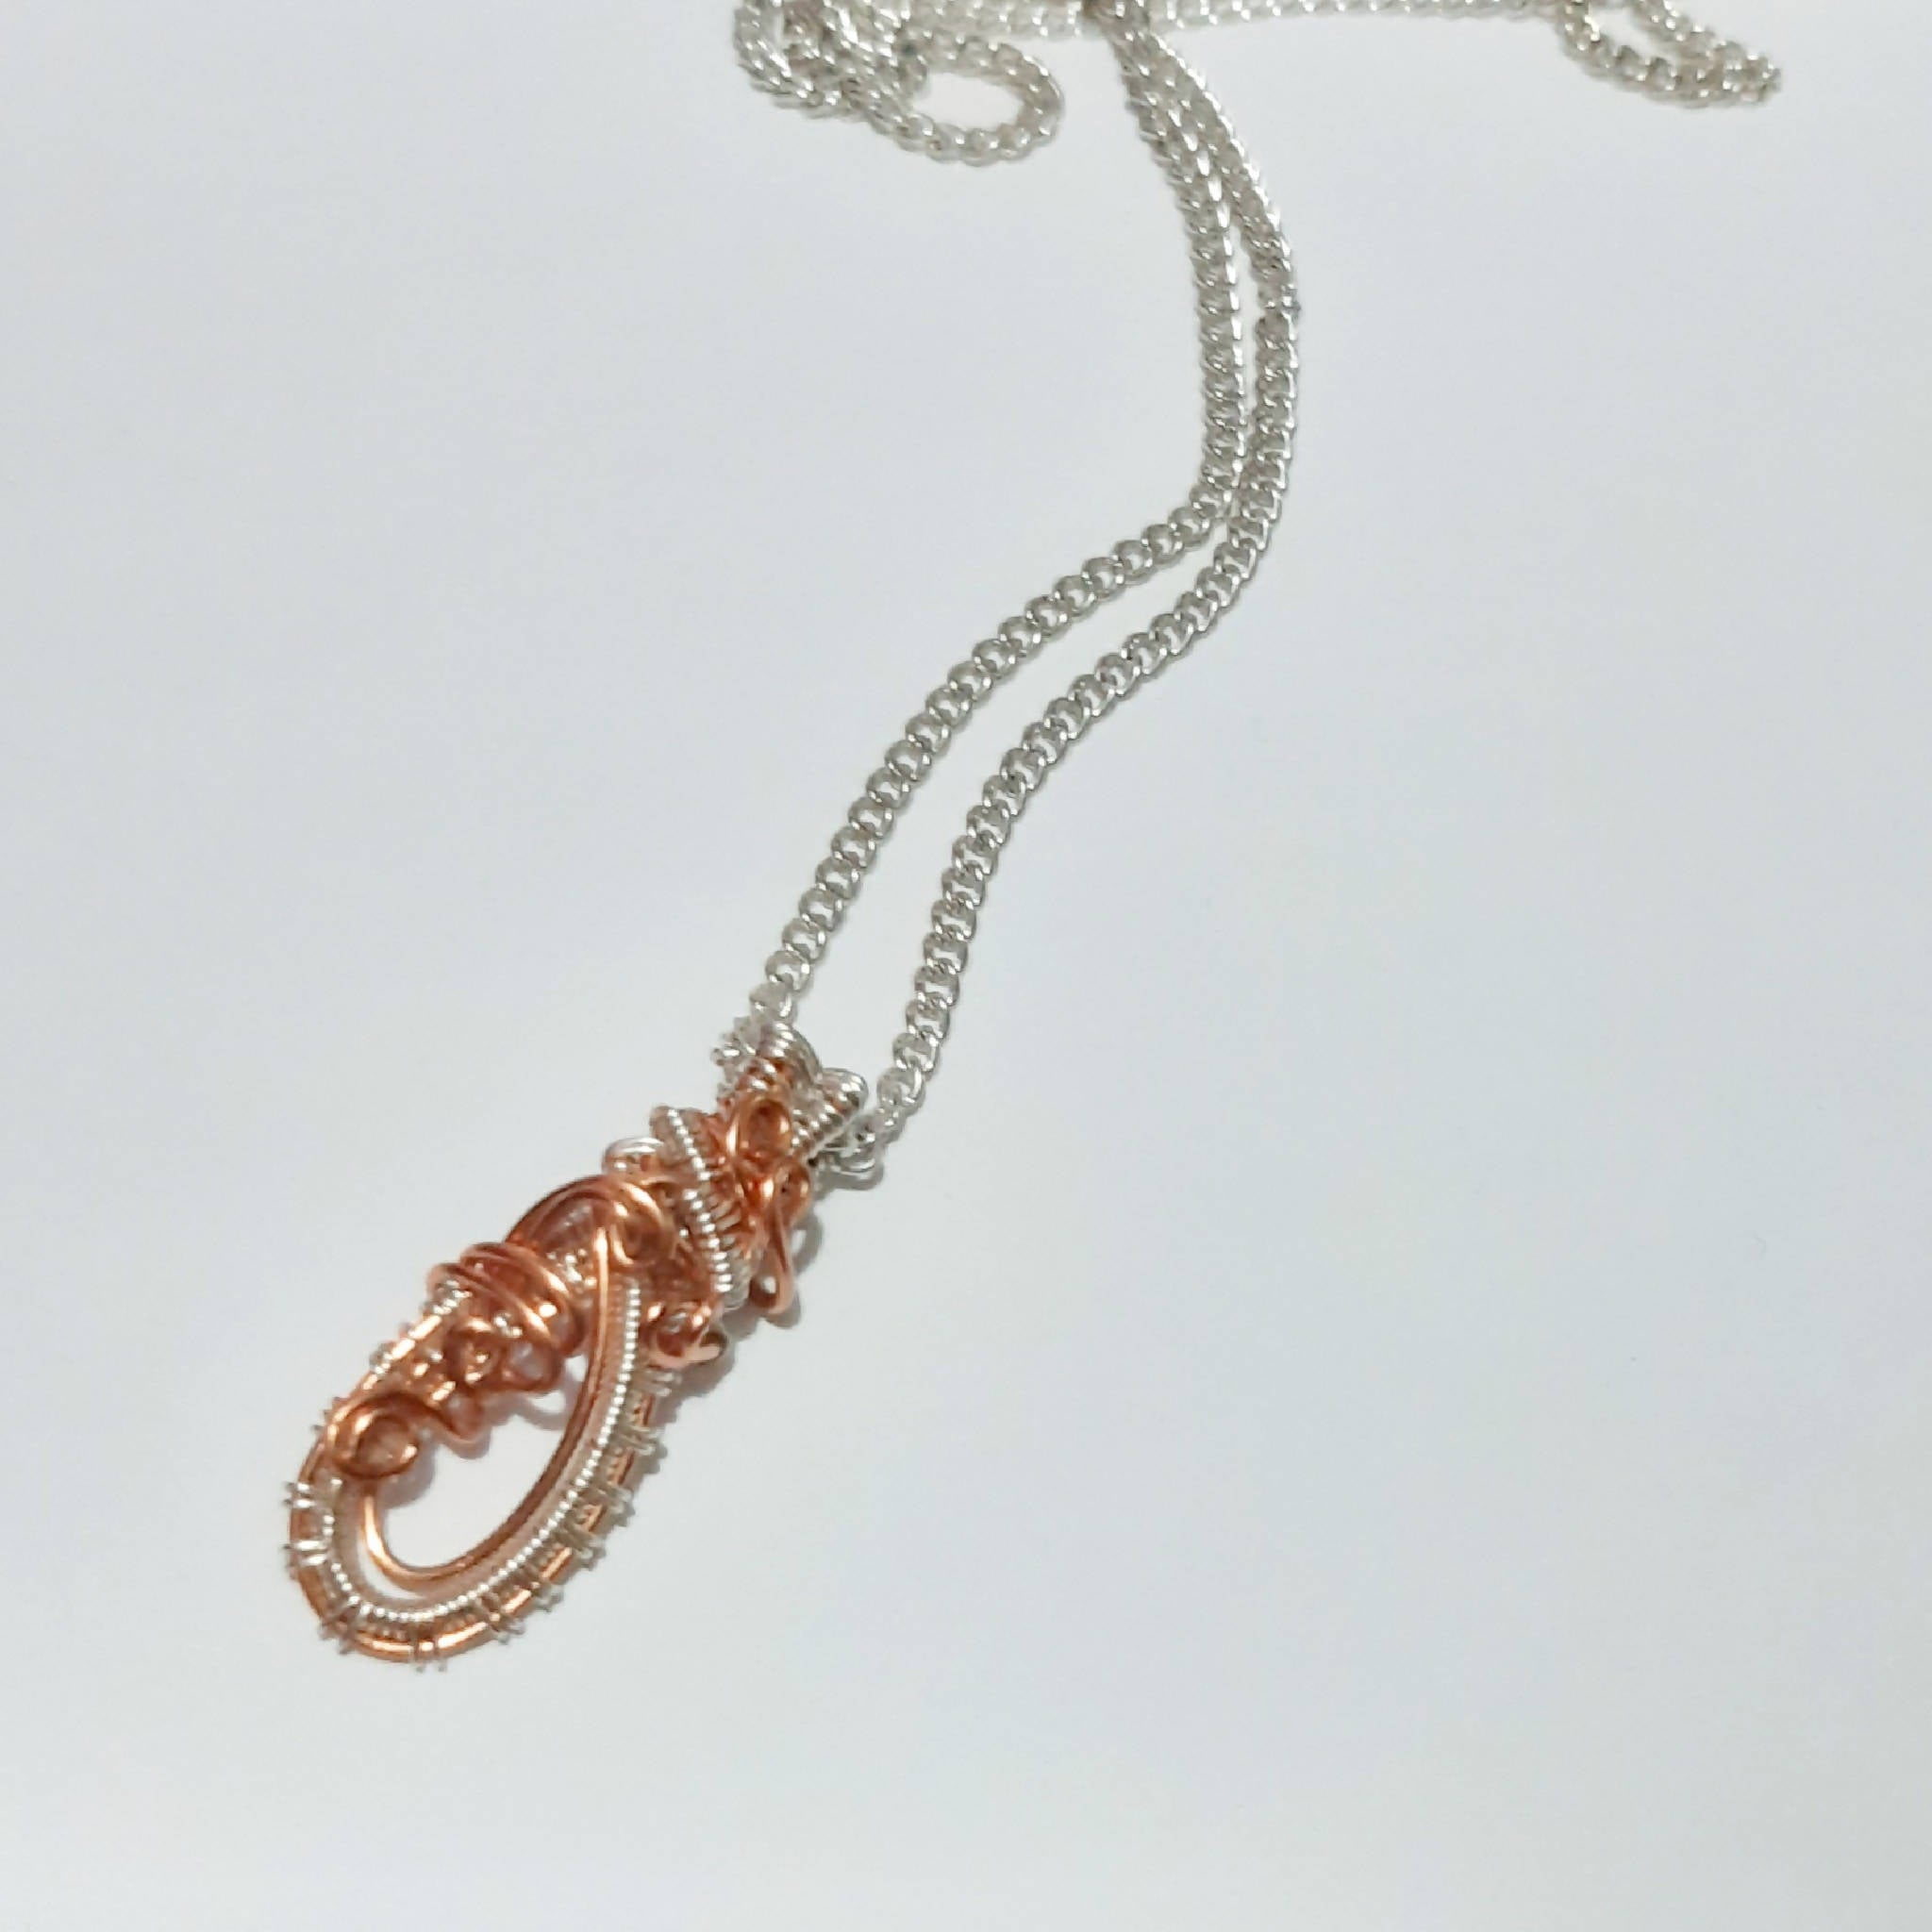 Copper jewellery